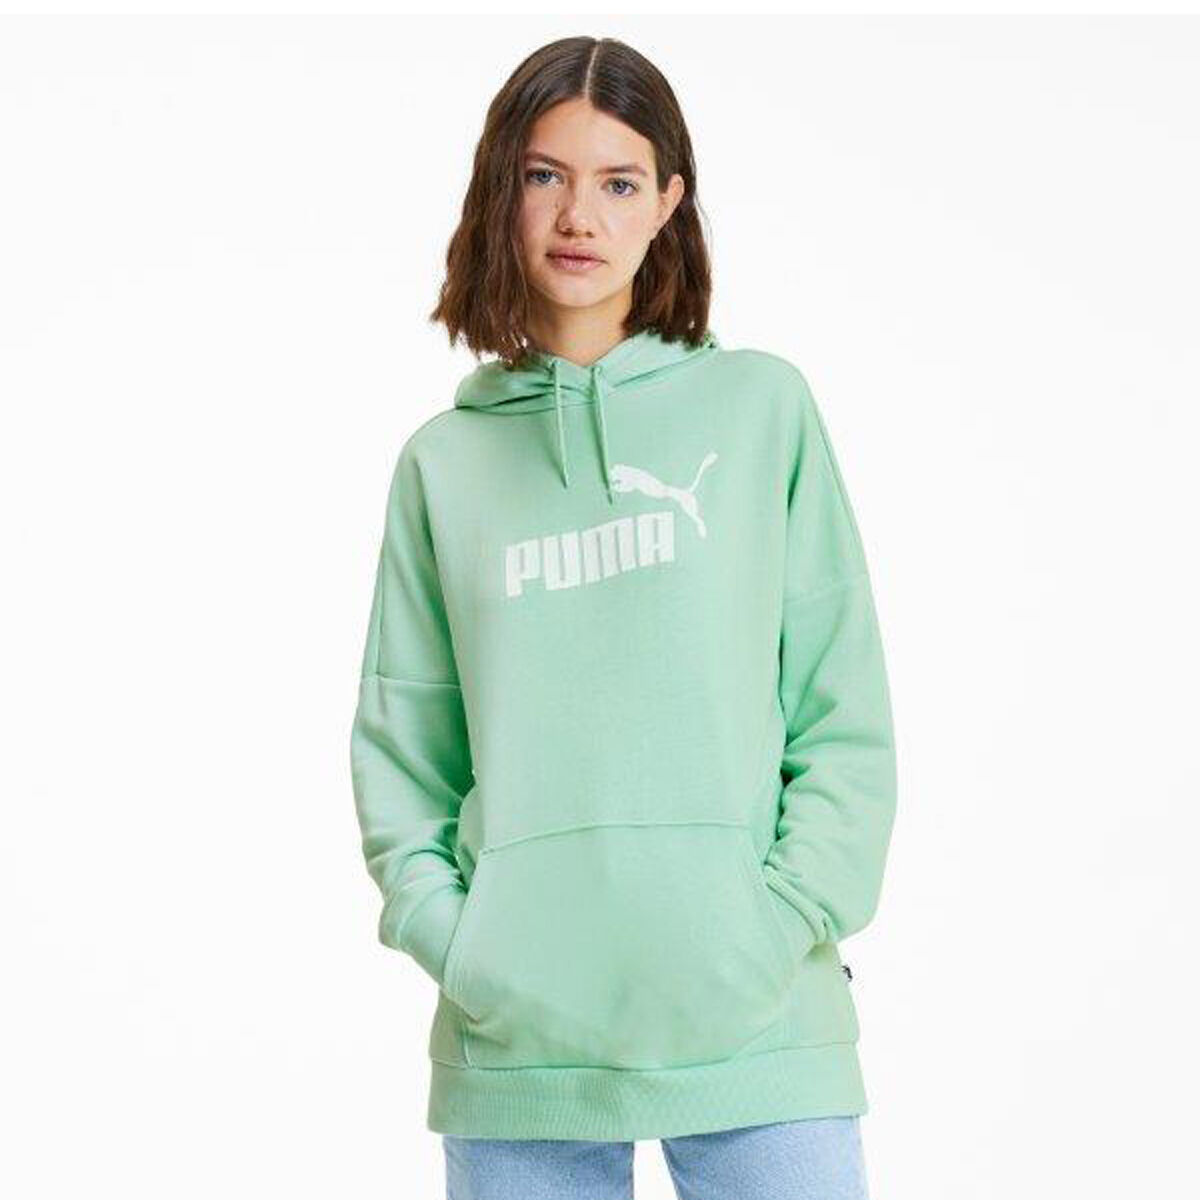 green puma sweater